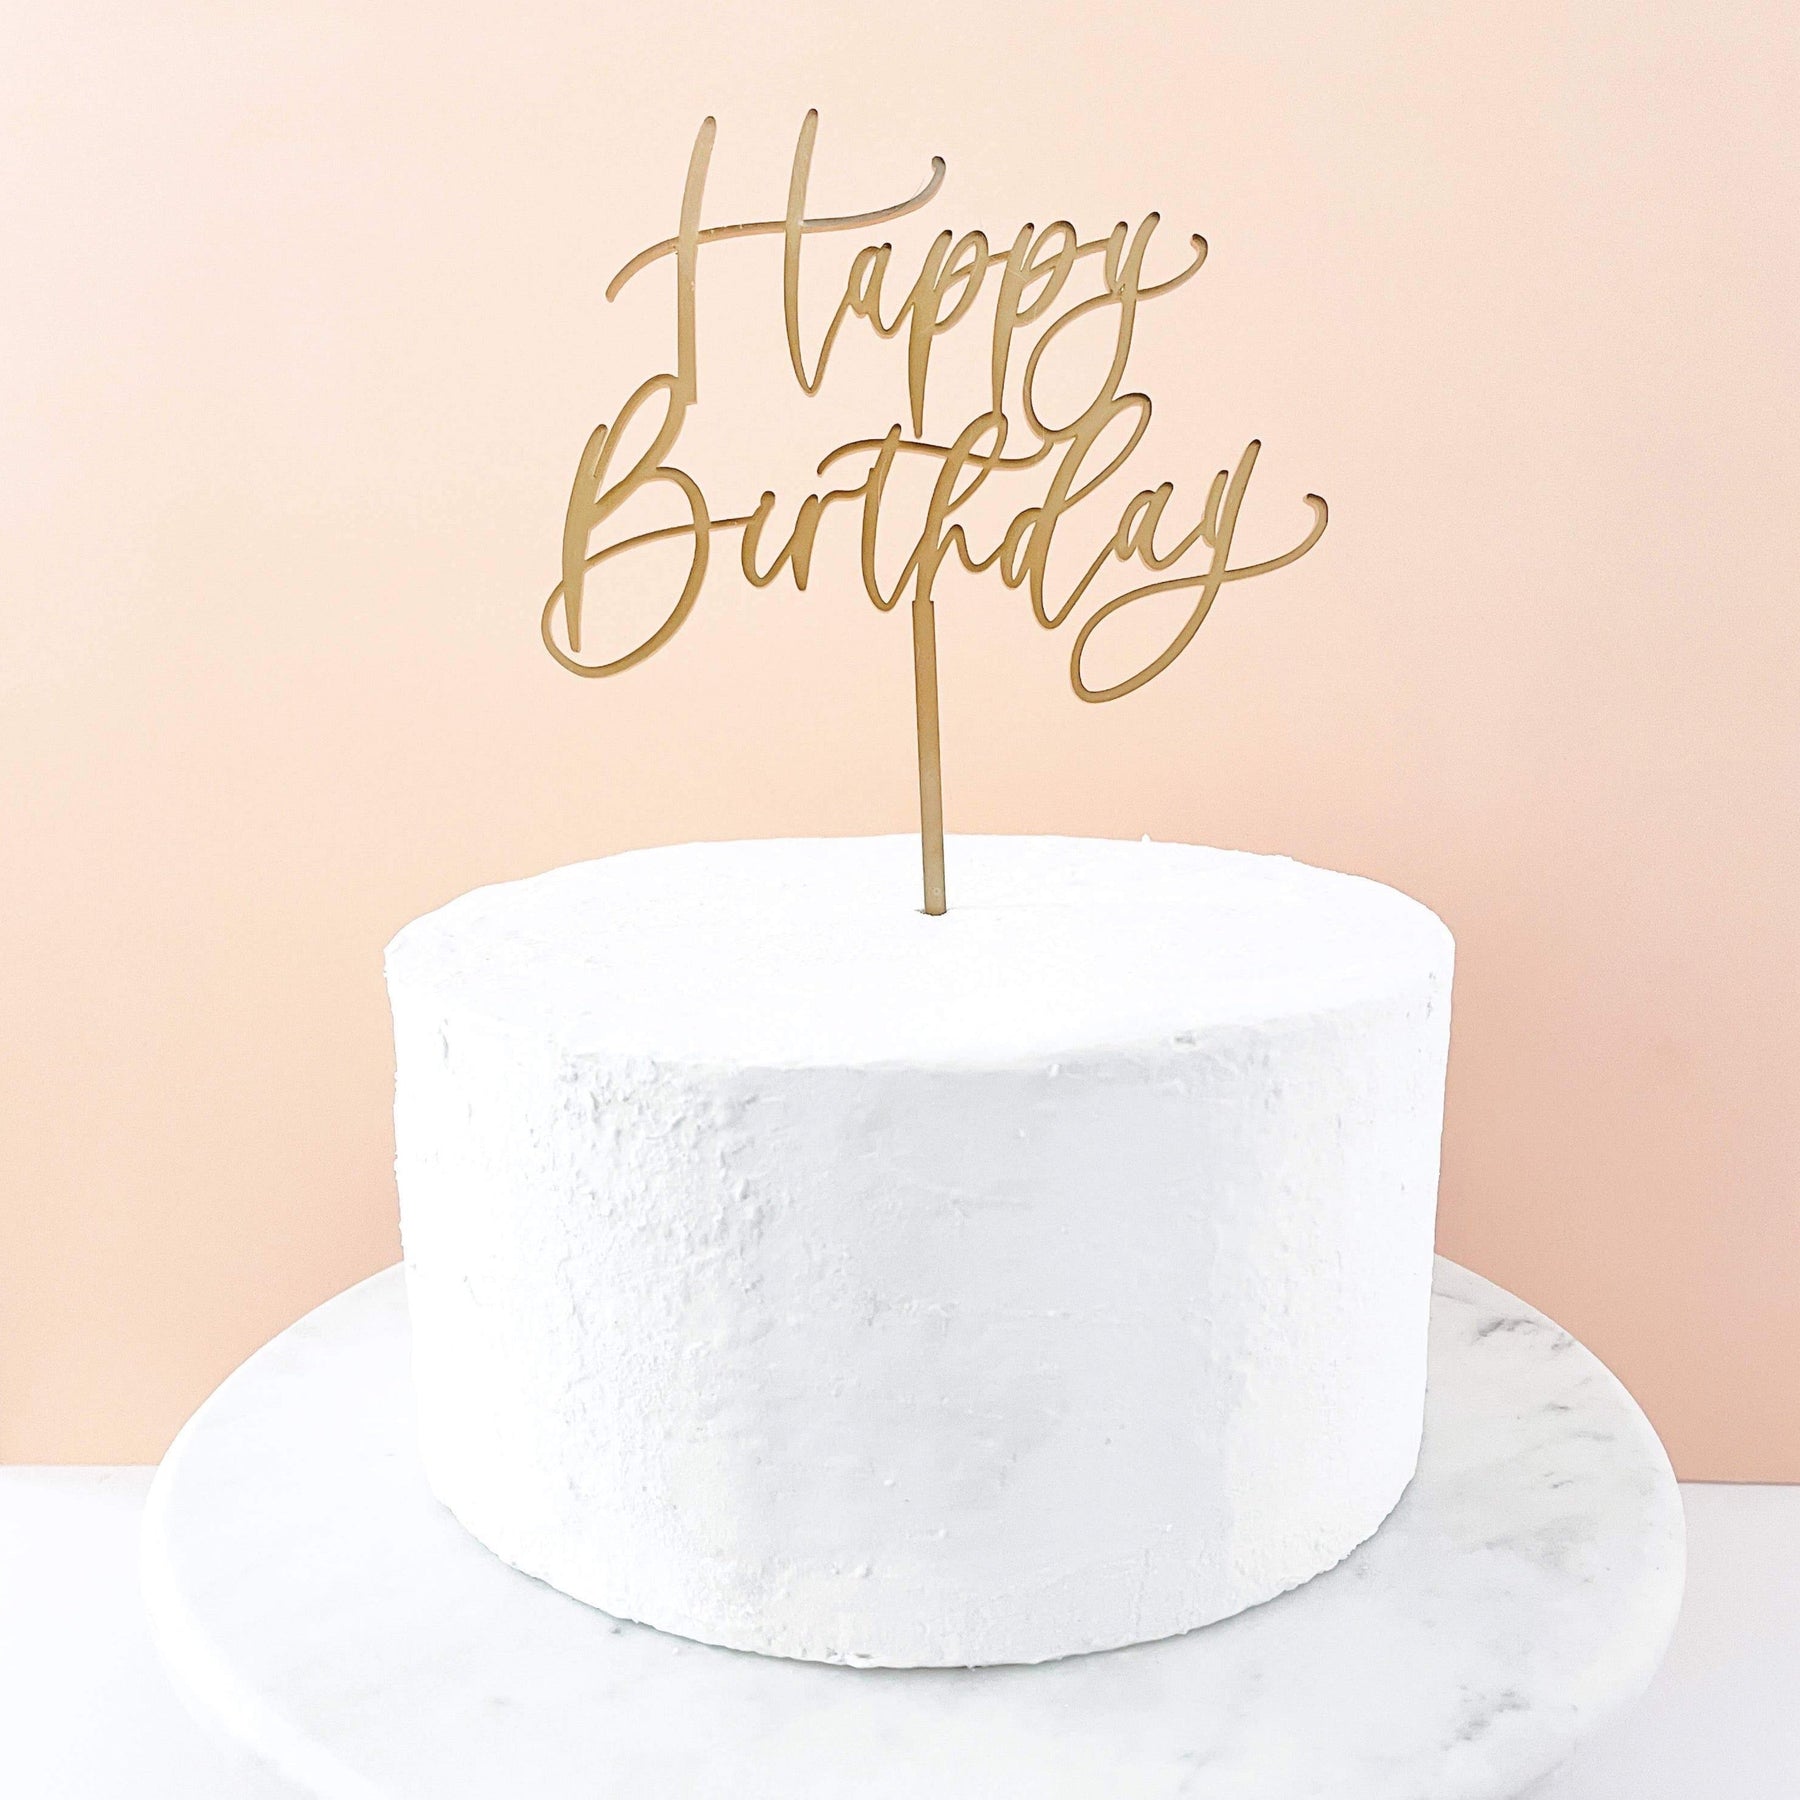 HAPPY BIRTHDAY CAKE TOPPER - PEACHY PINK – Bonjour Fête